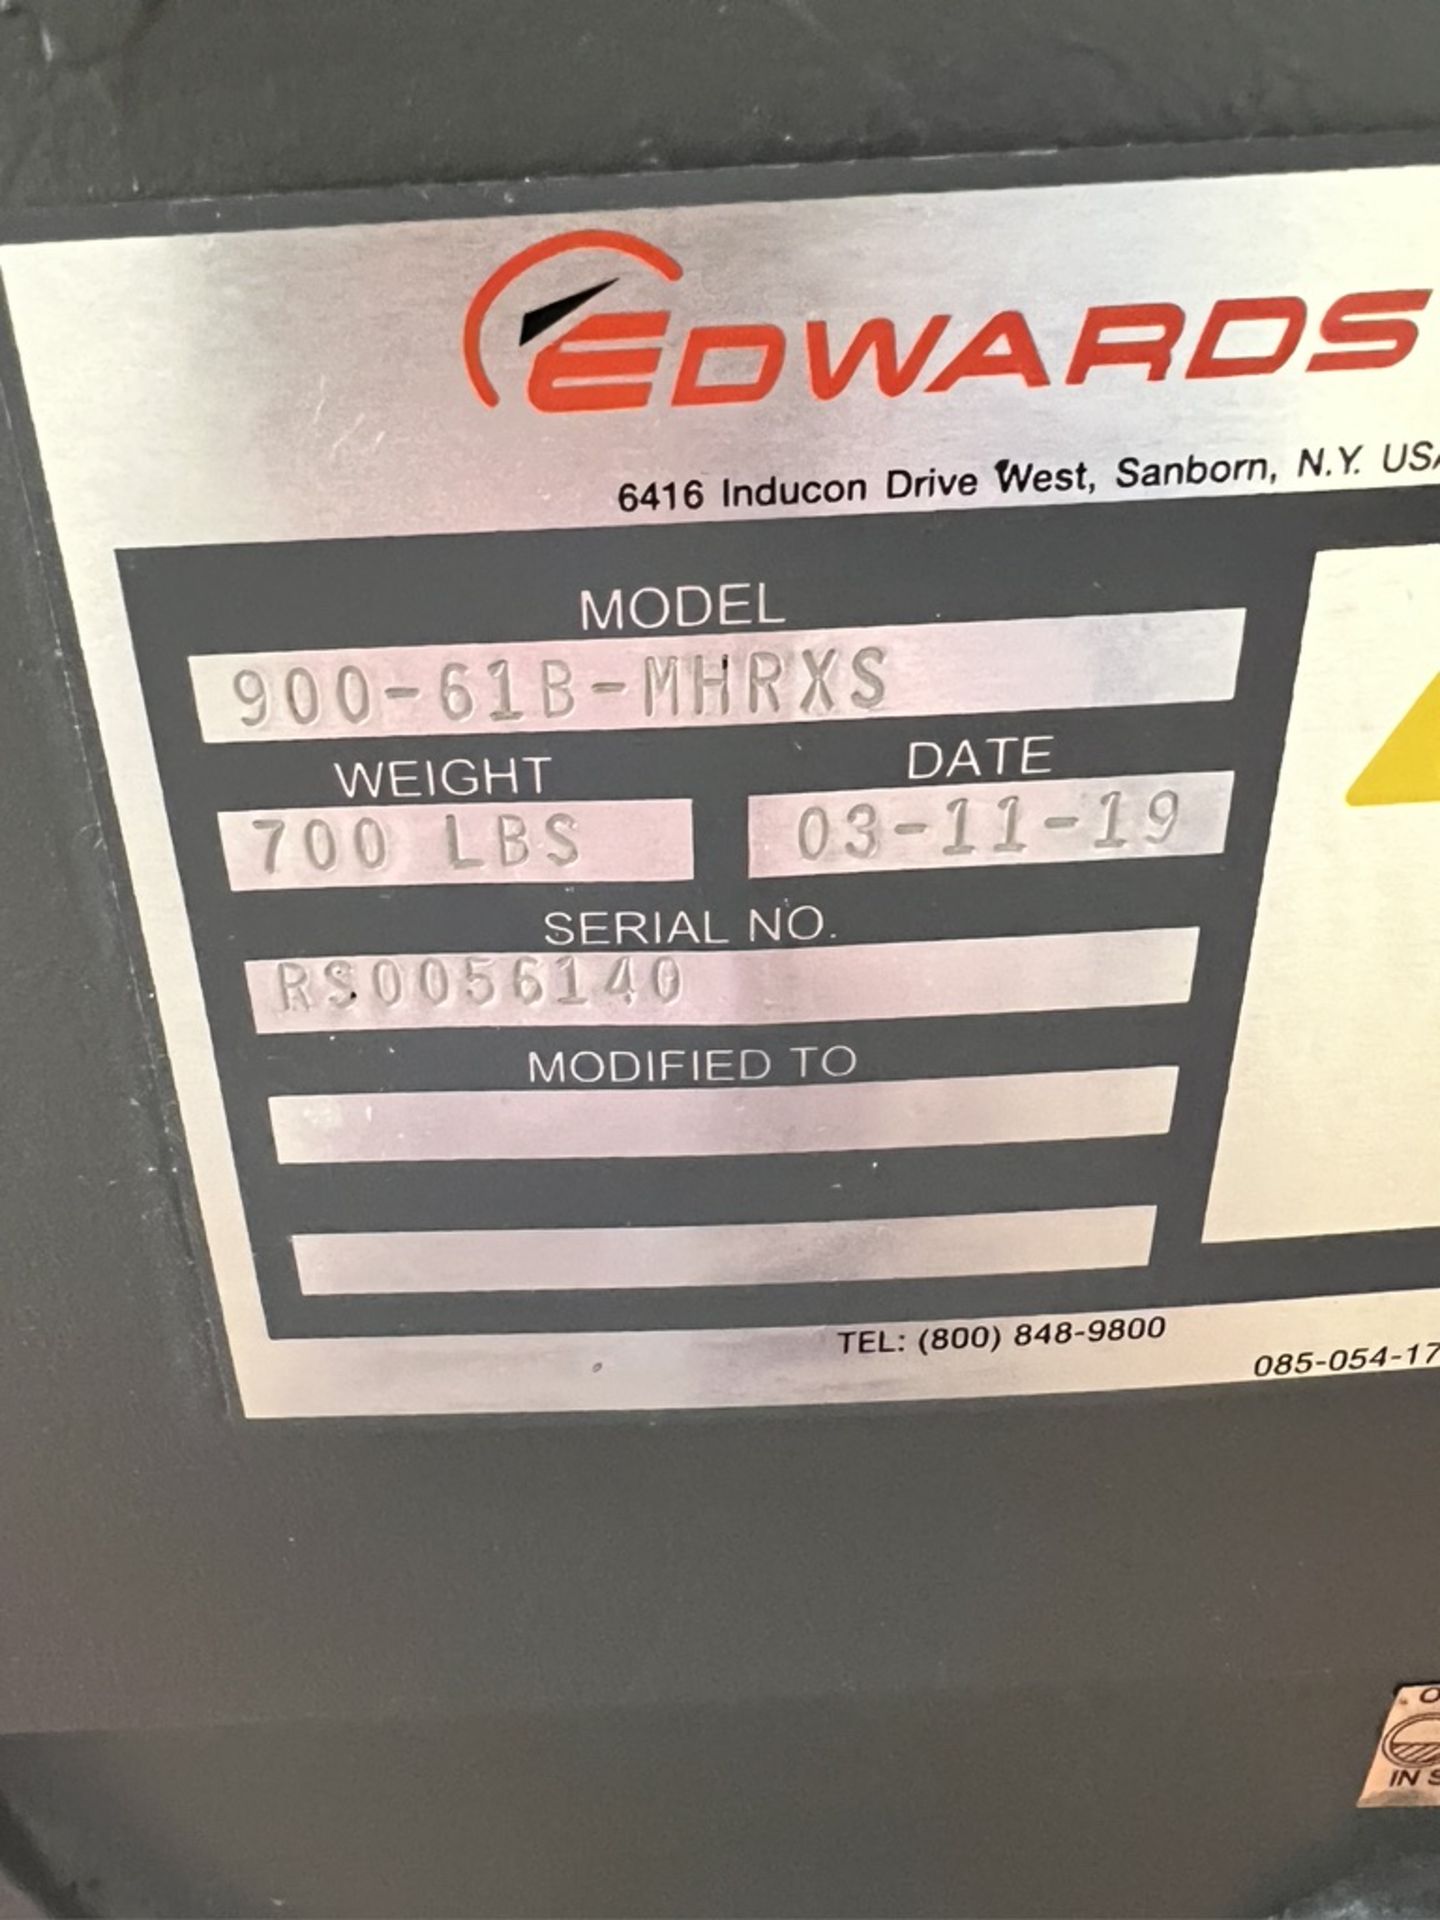 2019 STOKES EDWARDS MICROVAC ROTARY PISTON VACUUM PUMP, MODEL 900-61B-MHRXS, S/N RS0056140 - Image 6 of 6